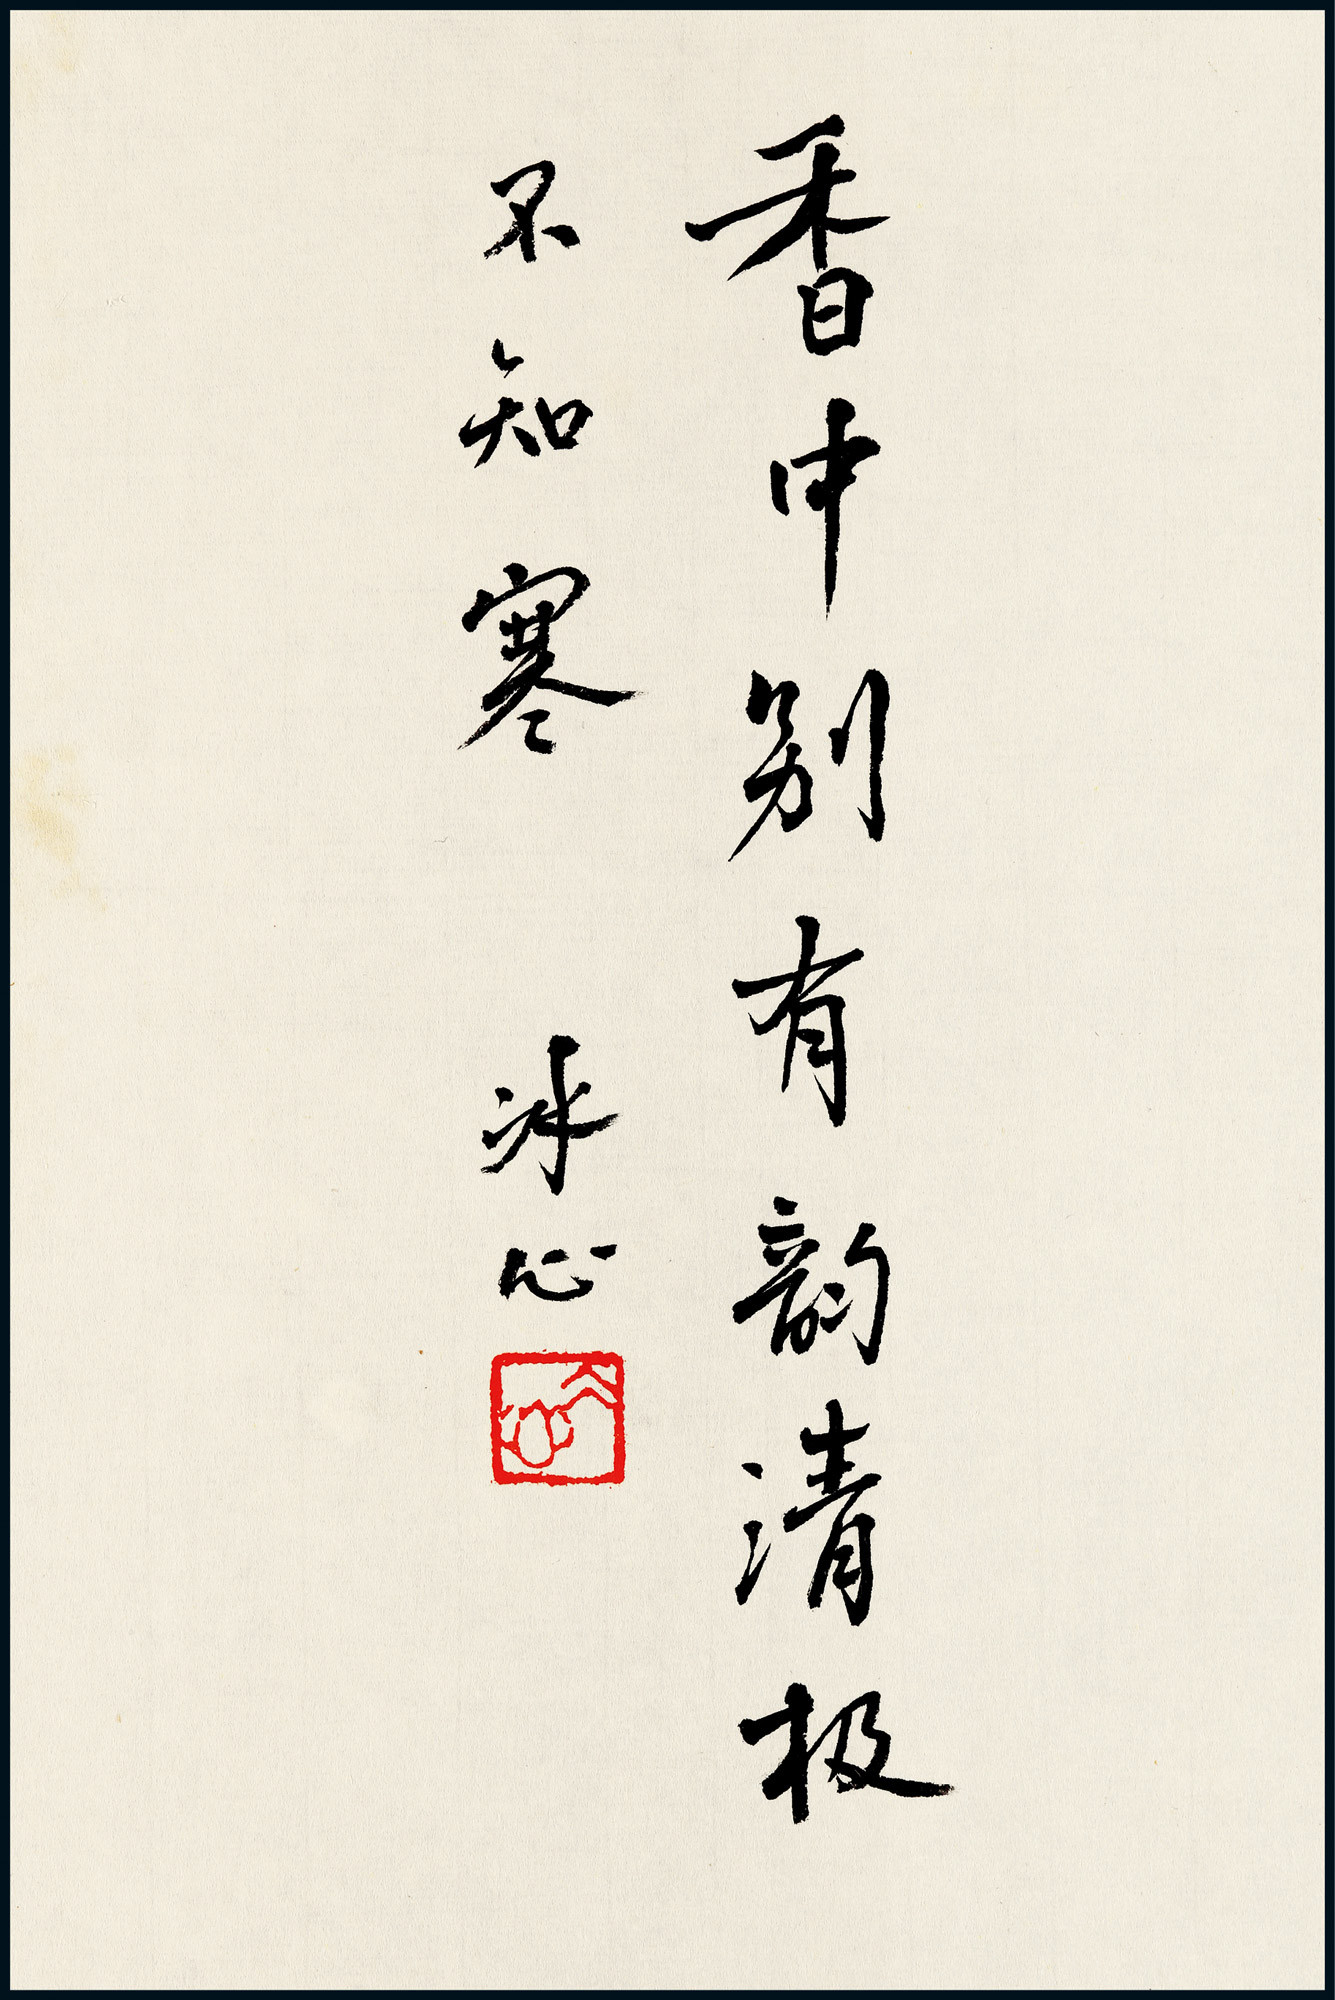 The calligraphy of Bing Xin